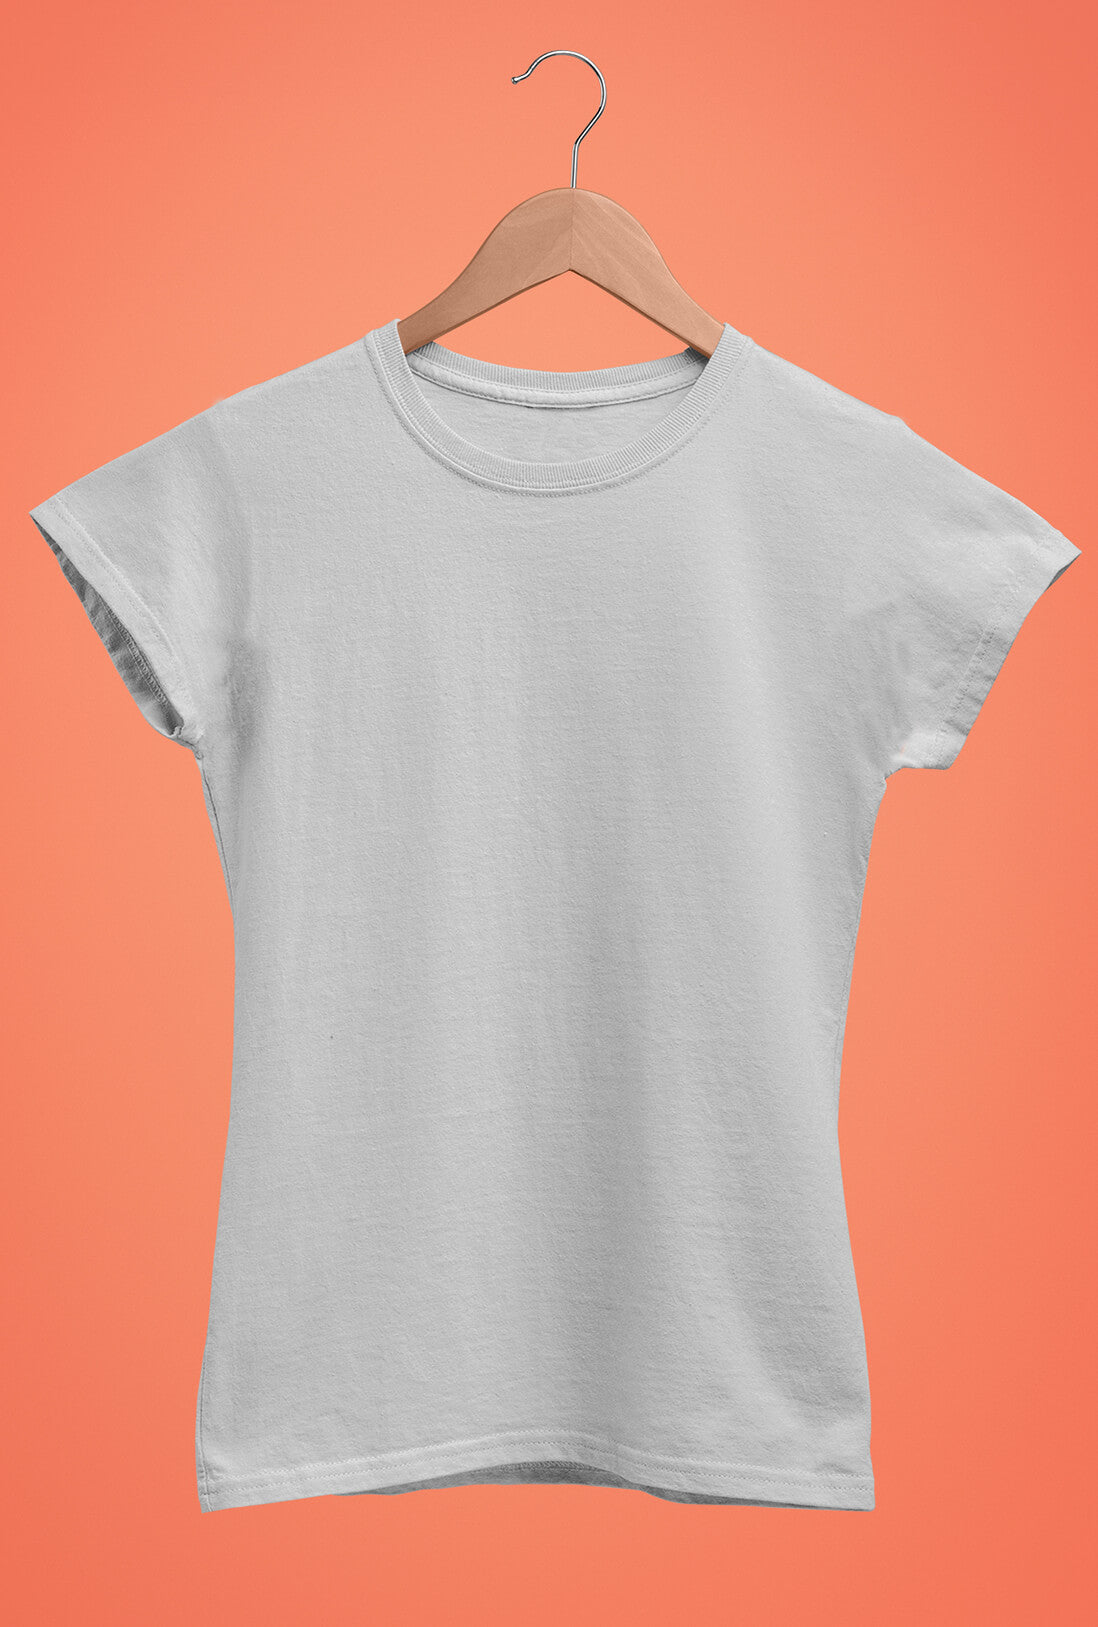 Women's Plain Grey Cotton T-Shirt